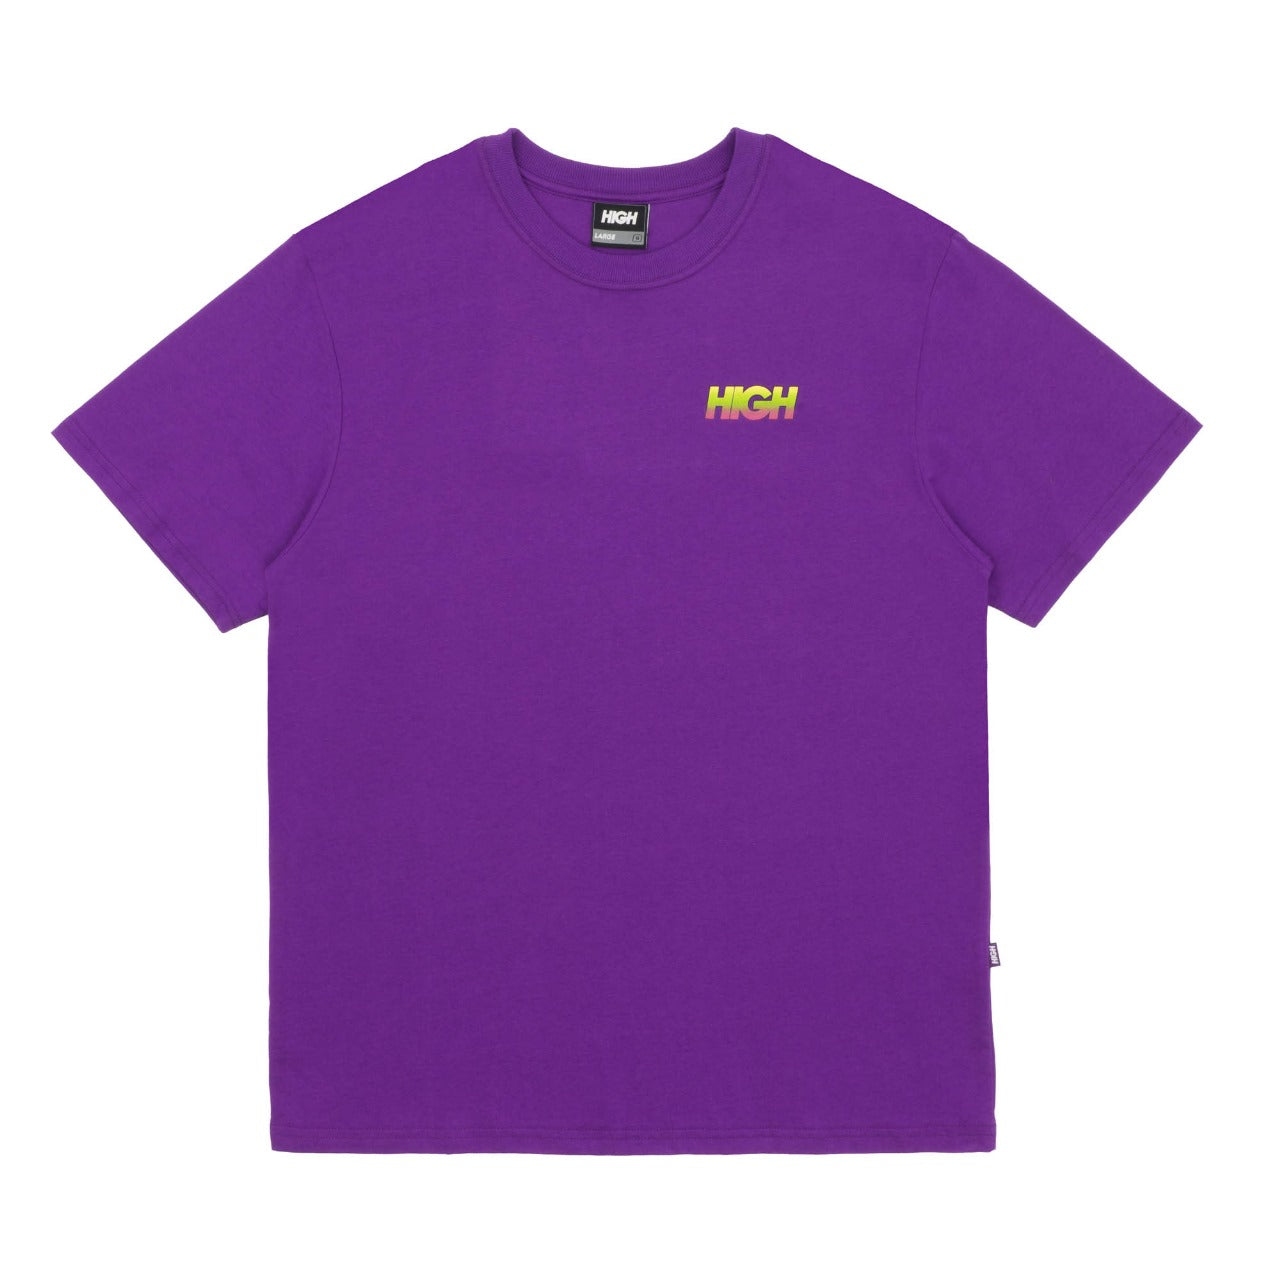 Camiseta High The Fantasia Purple (8127756566744)